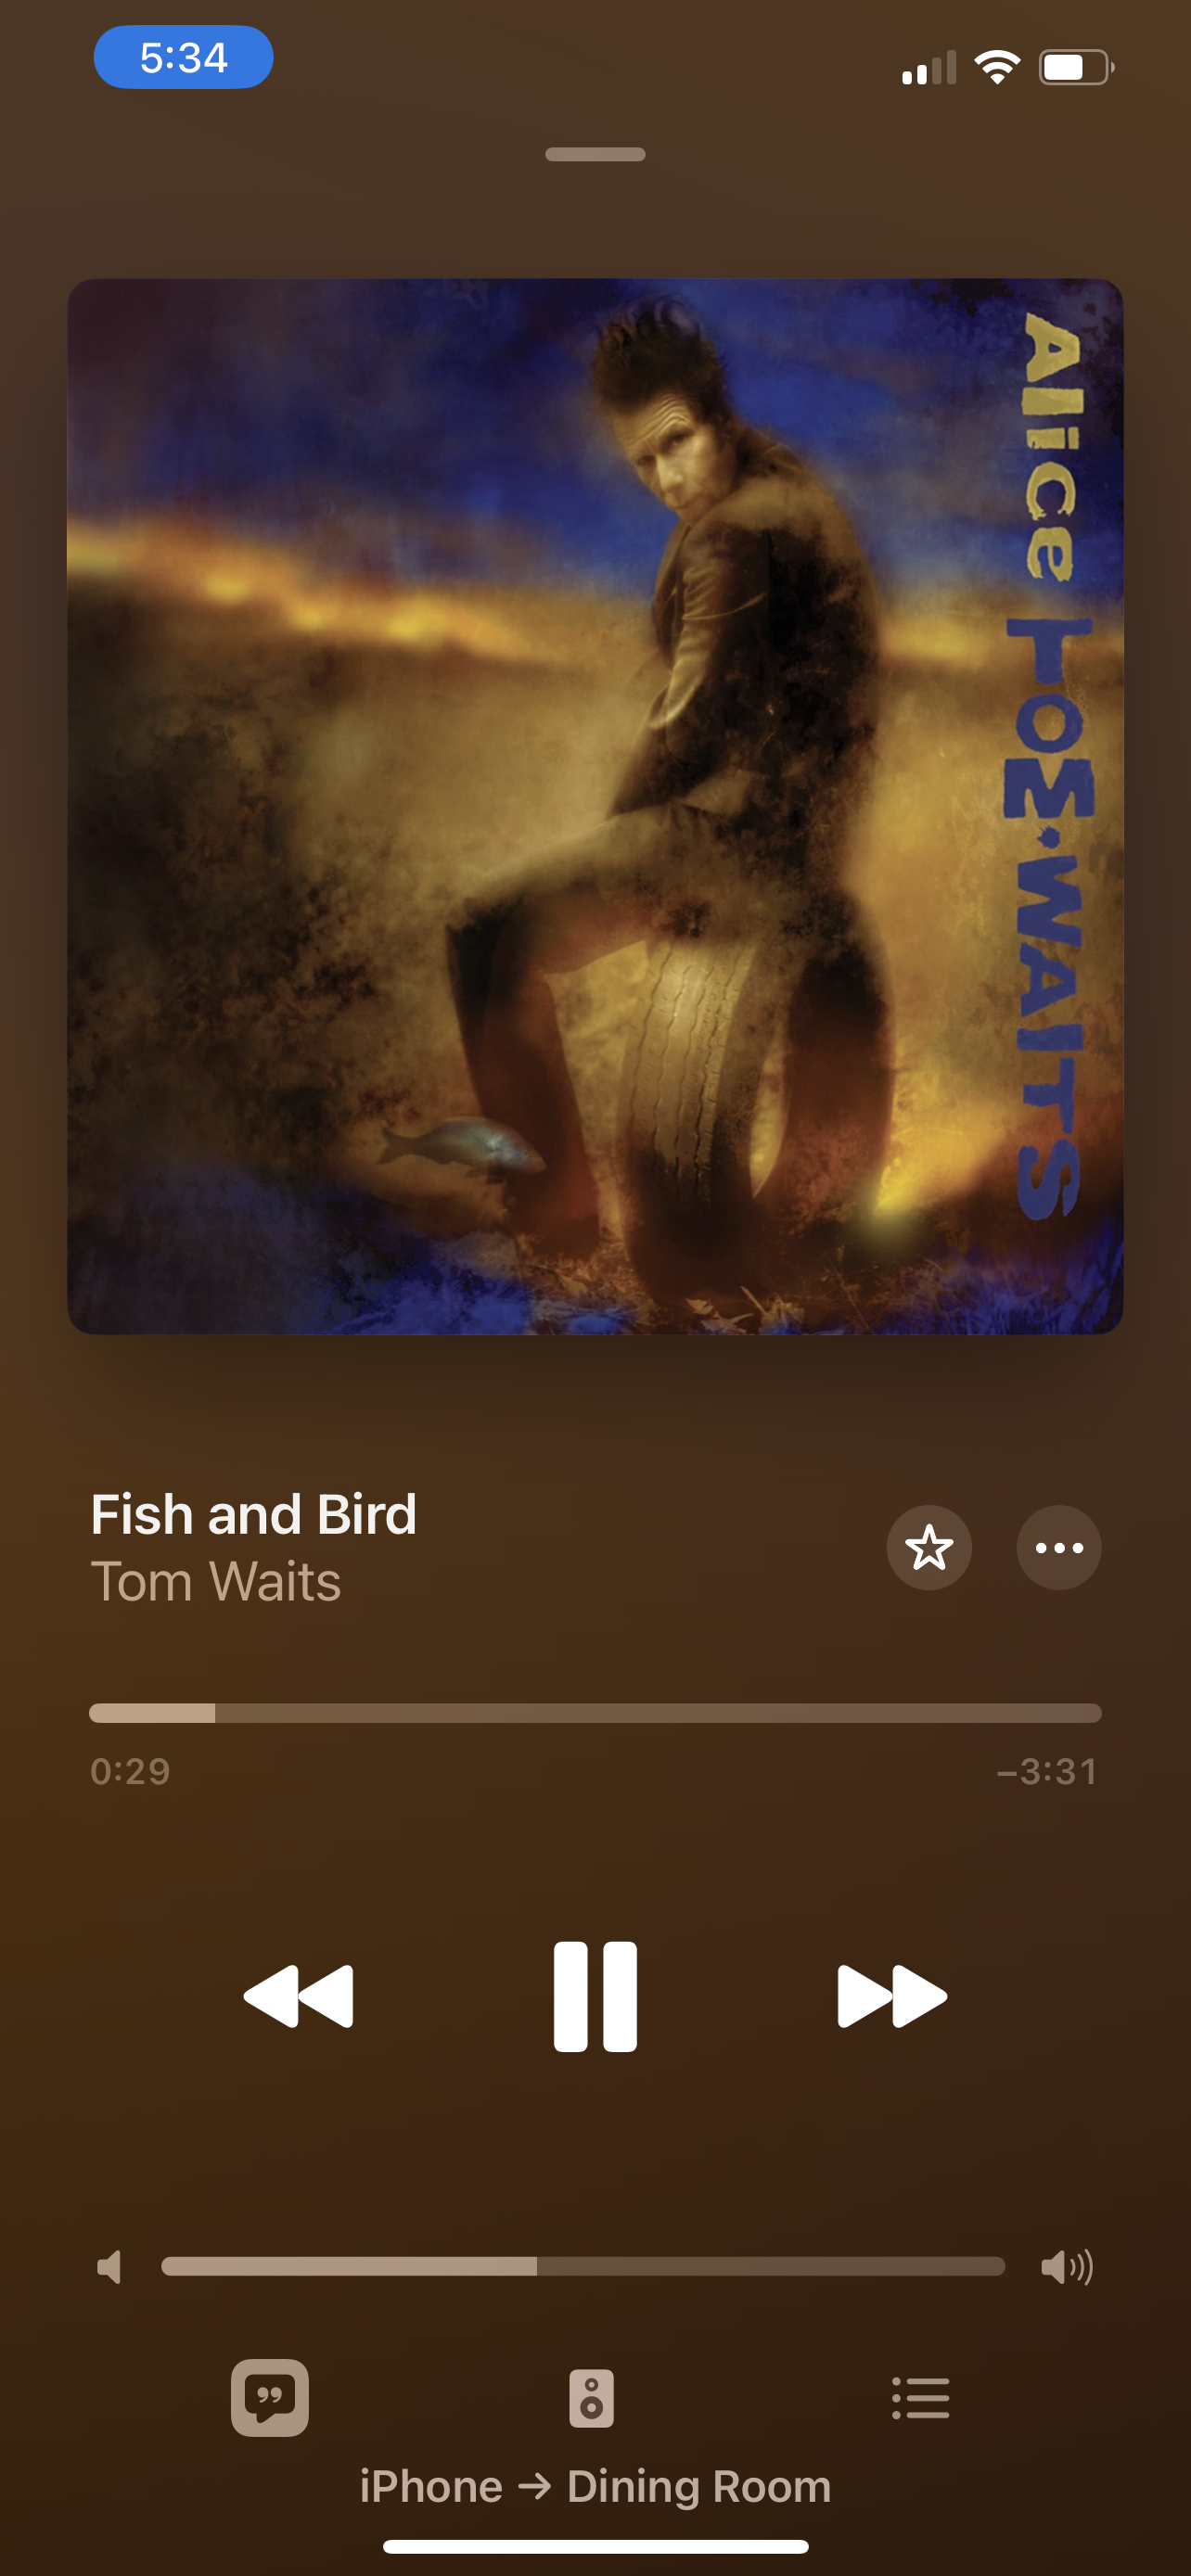 Album cover for Tom Waits Alice.